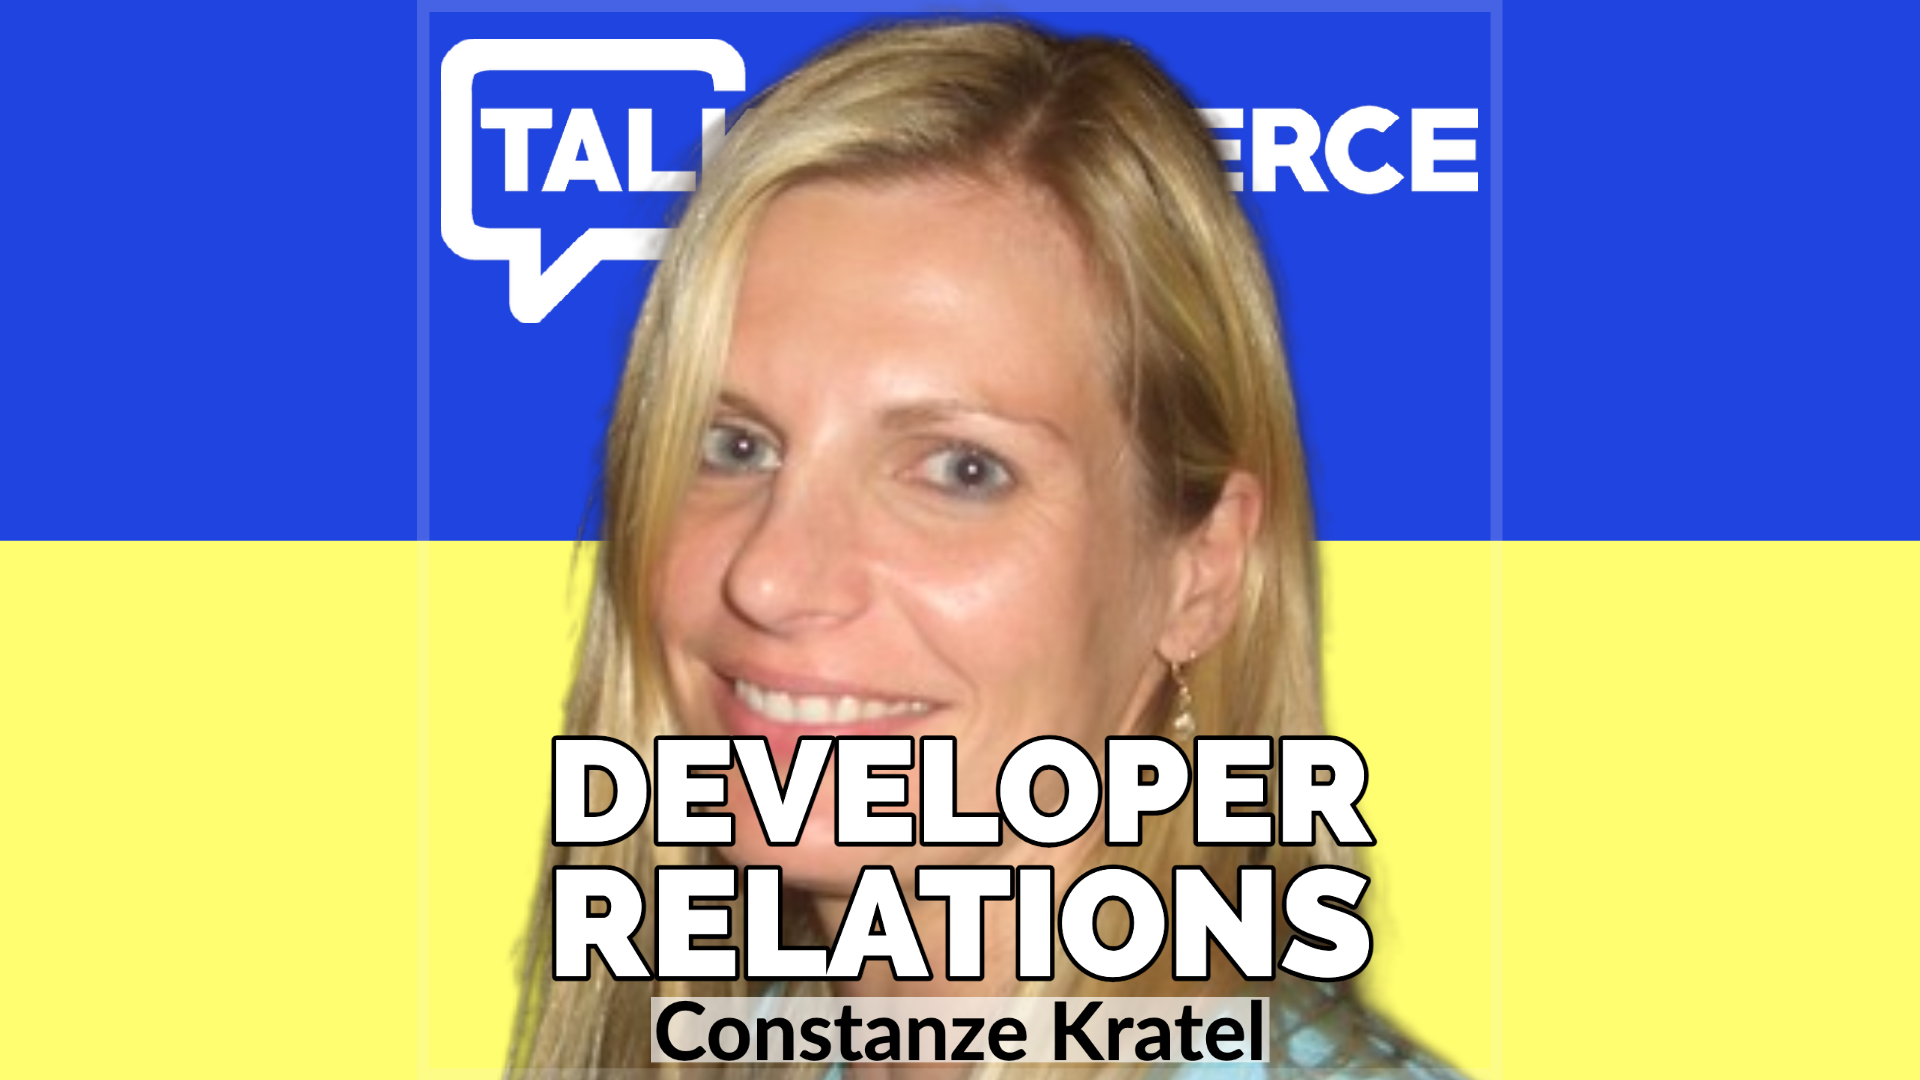 Talk-Commerce Constanze Kratel